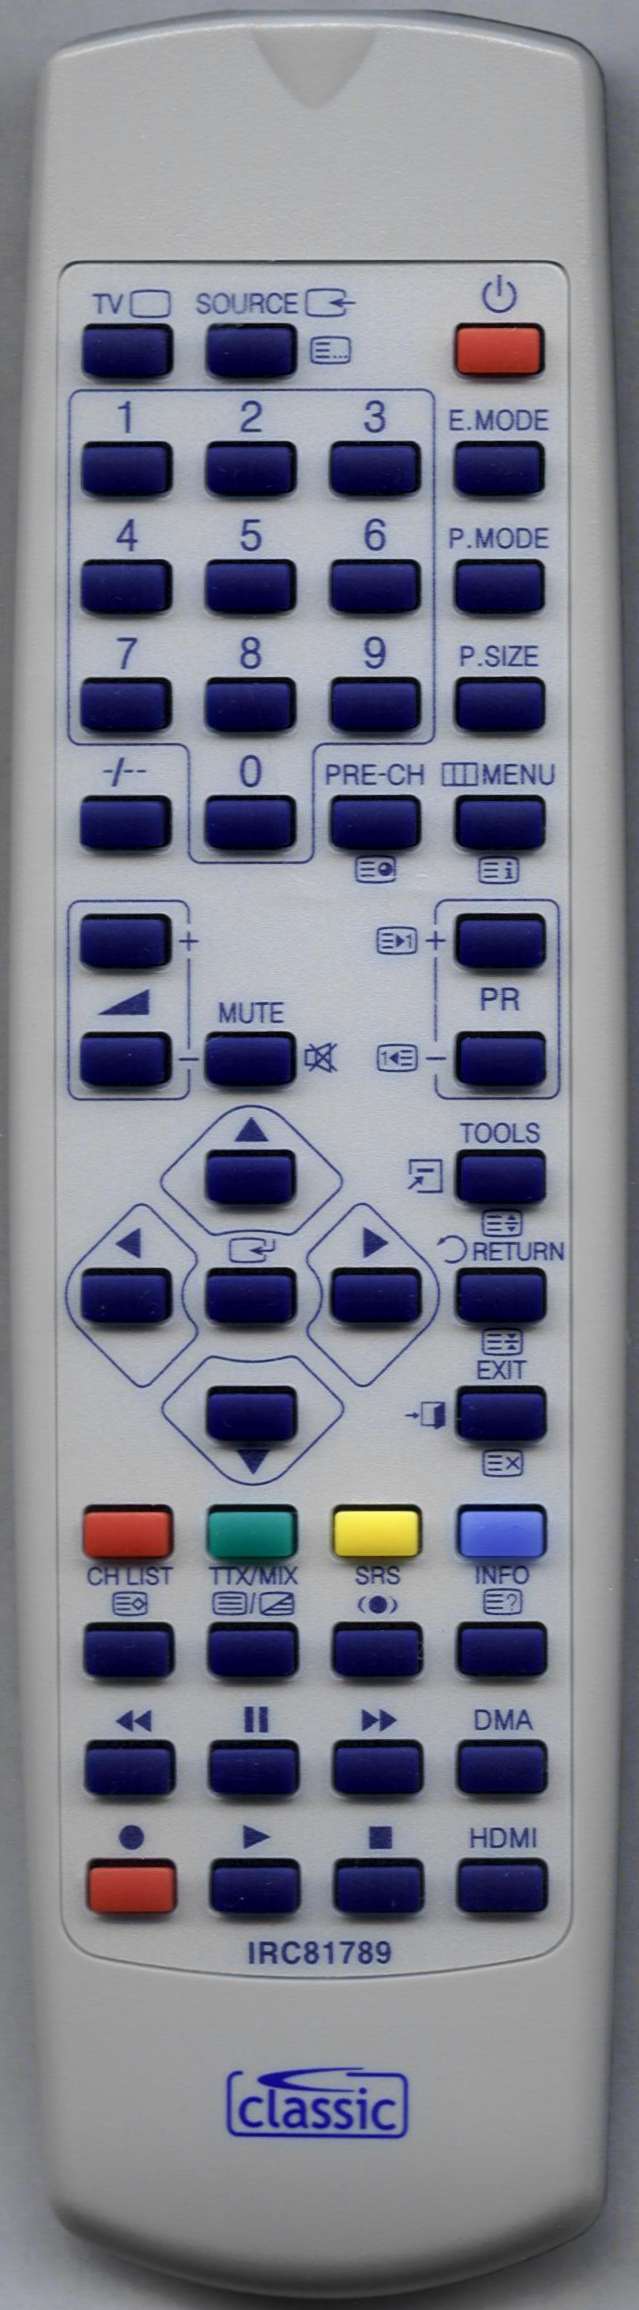 SAMSUNG BN59-00686A Remote Control Alternative